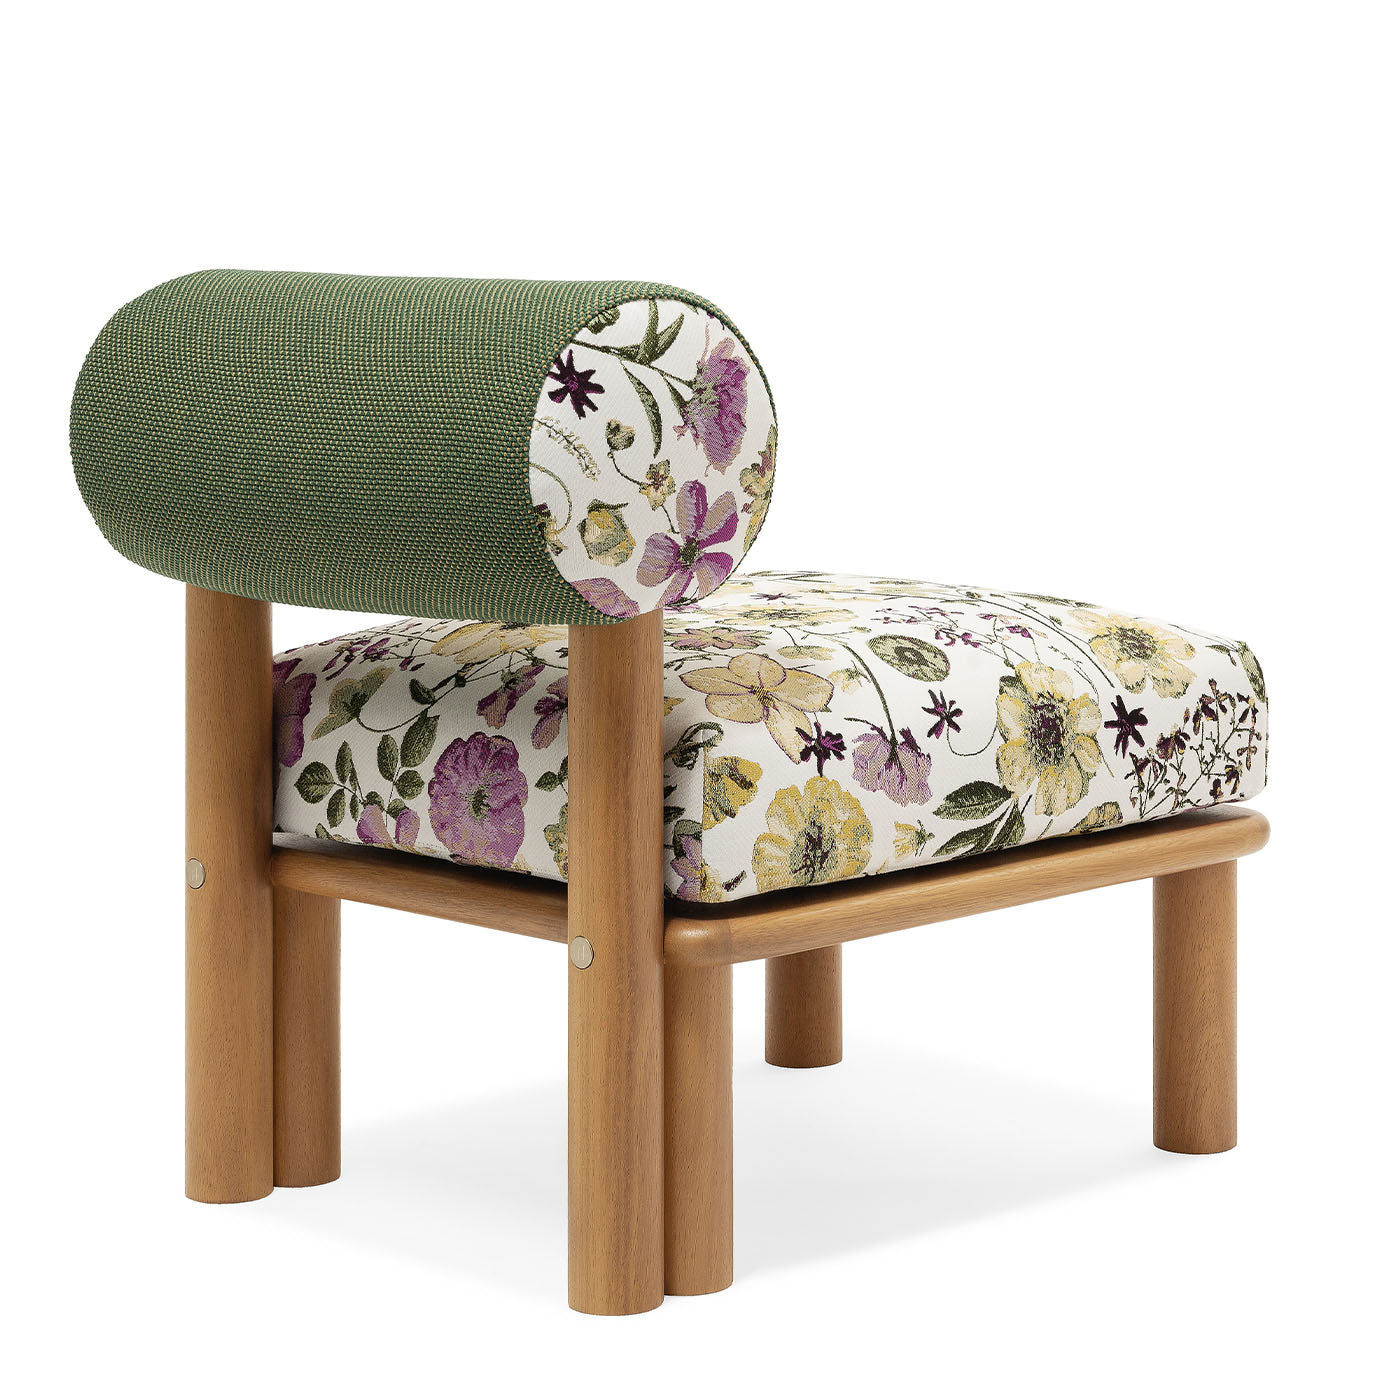 Maitha Julia Outdoor Lounge Chair by Lorenza Bozzoli - Alternative view 1